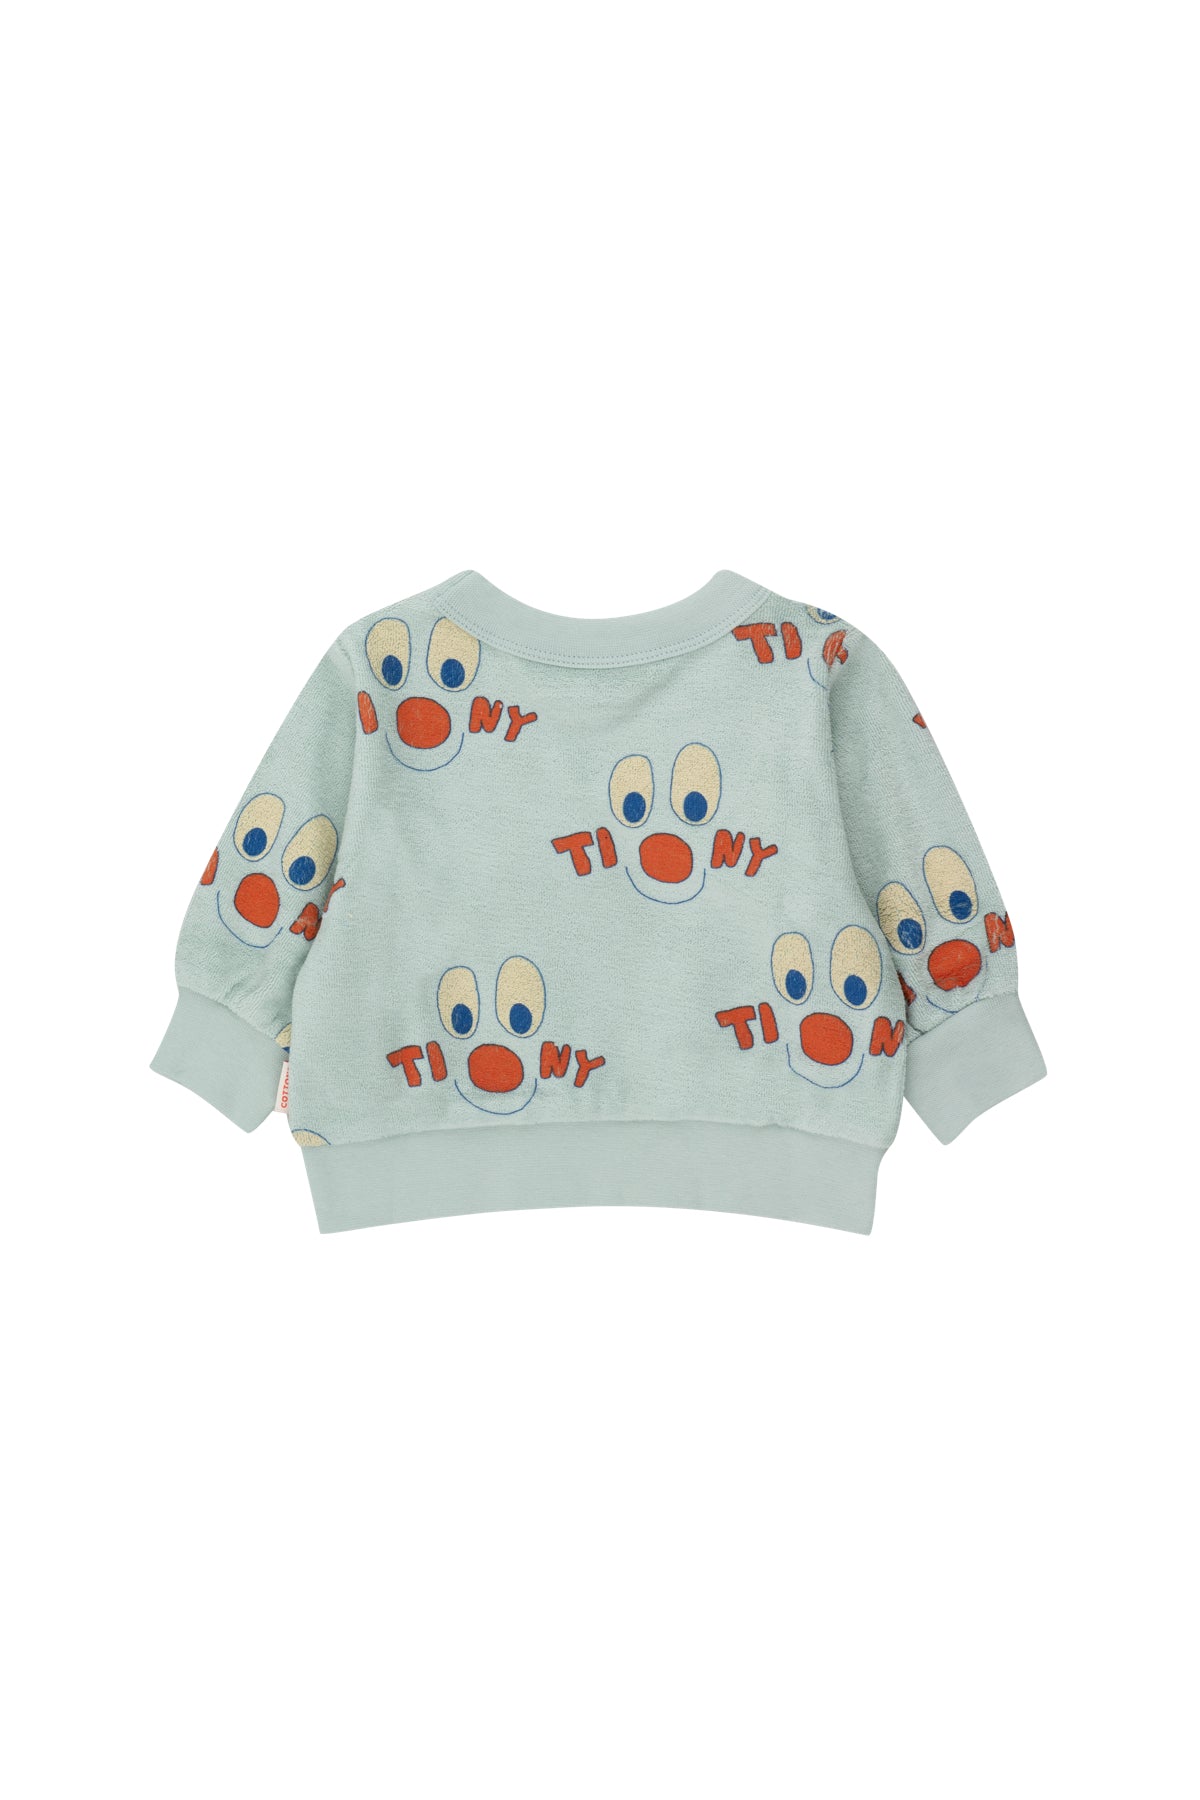 Tiny Cottons - clowns baby sweatshirt - jade grey